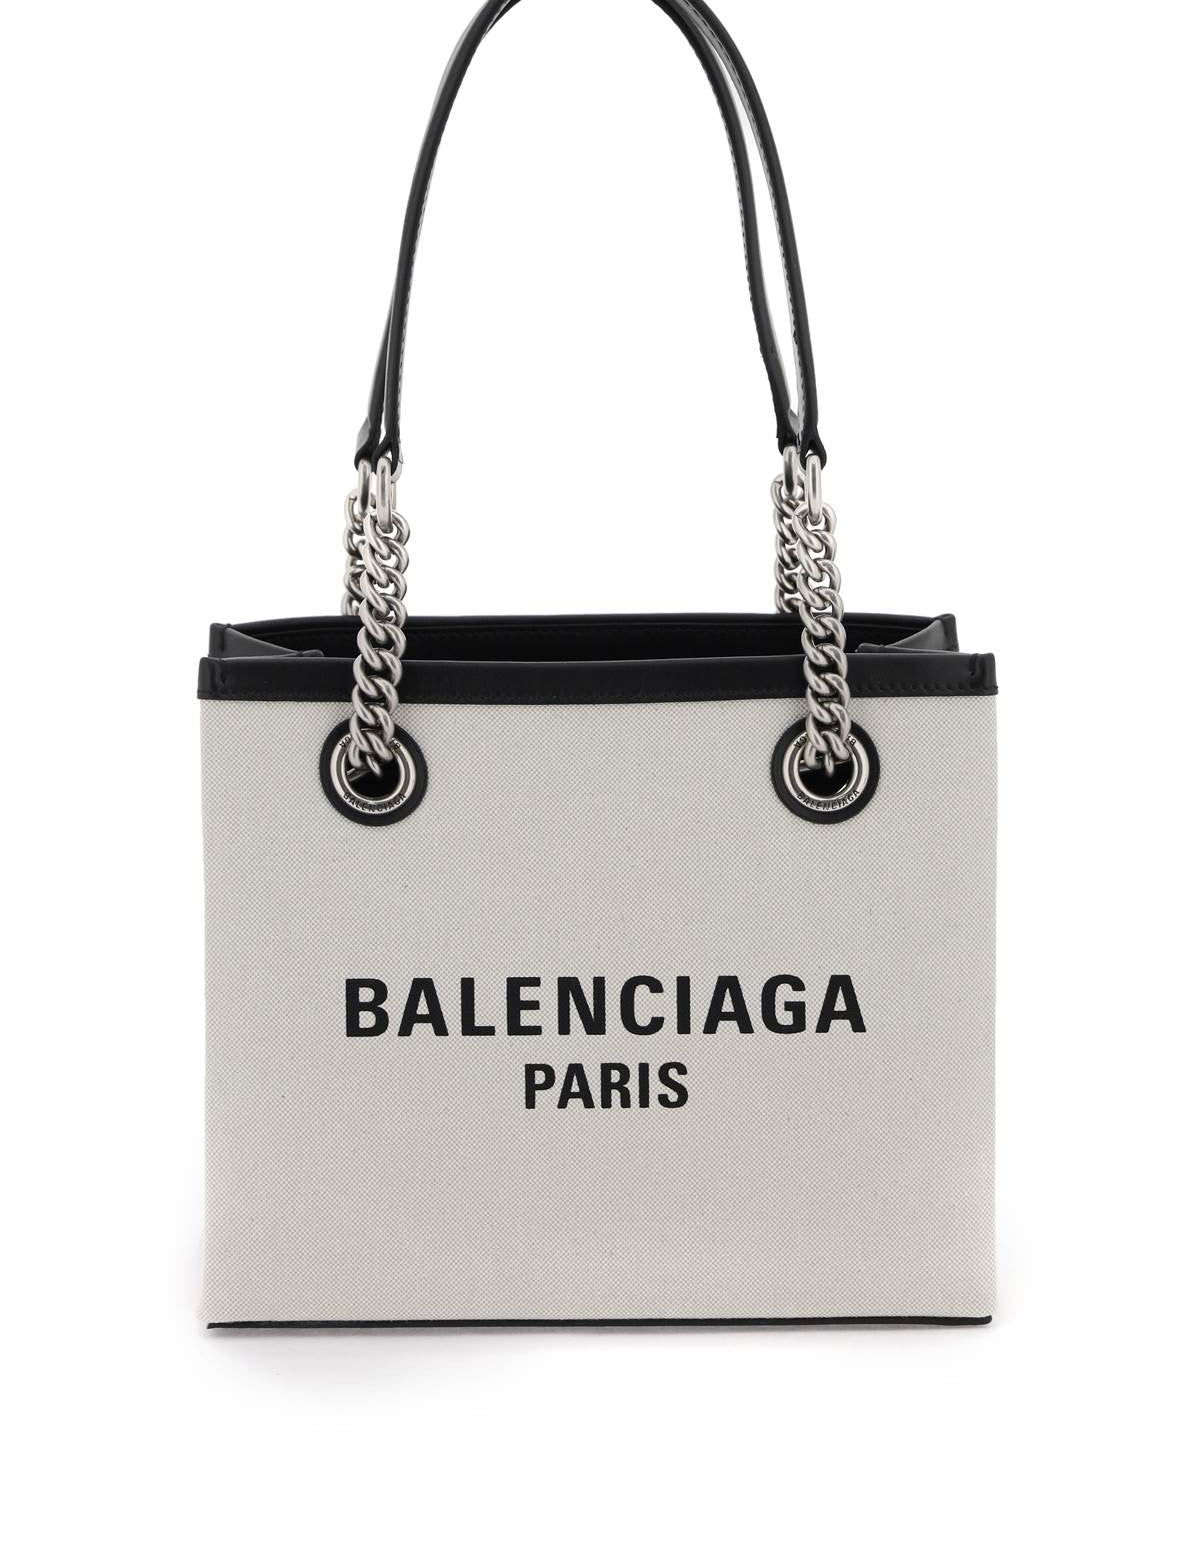 balenciaga-small-duty-free-tote-bag.jpg